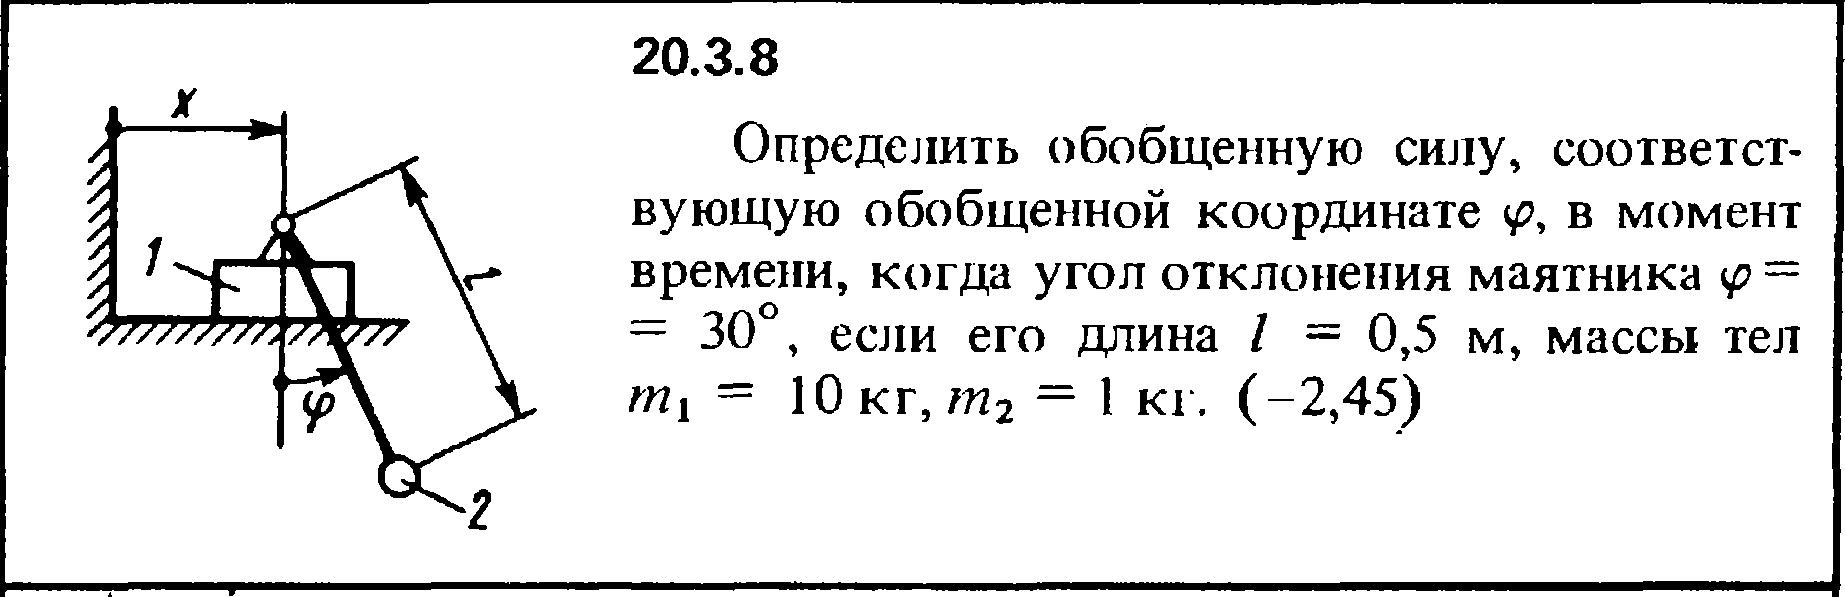 Решение 20.3.8 из сборника (решебника) Кепе О.Е. 1989